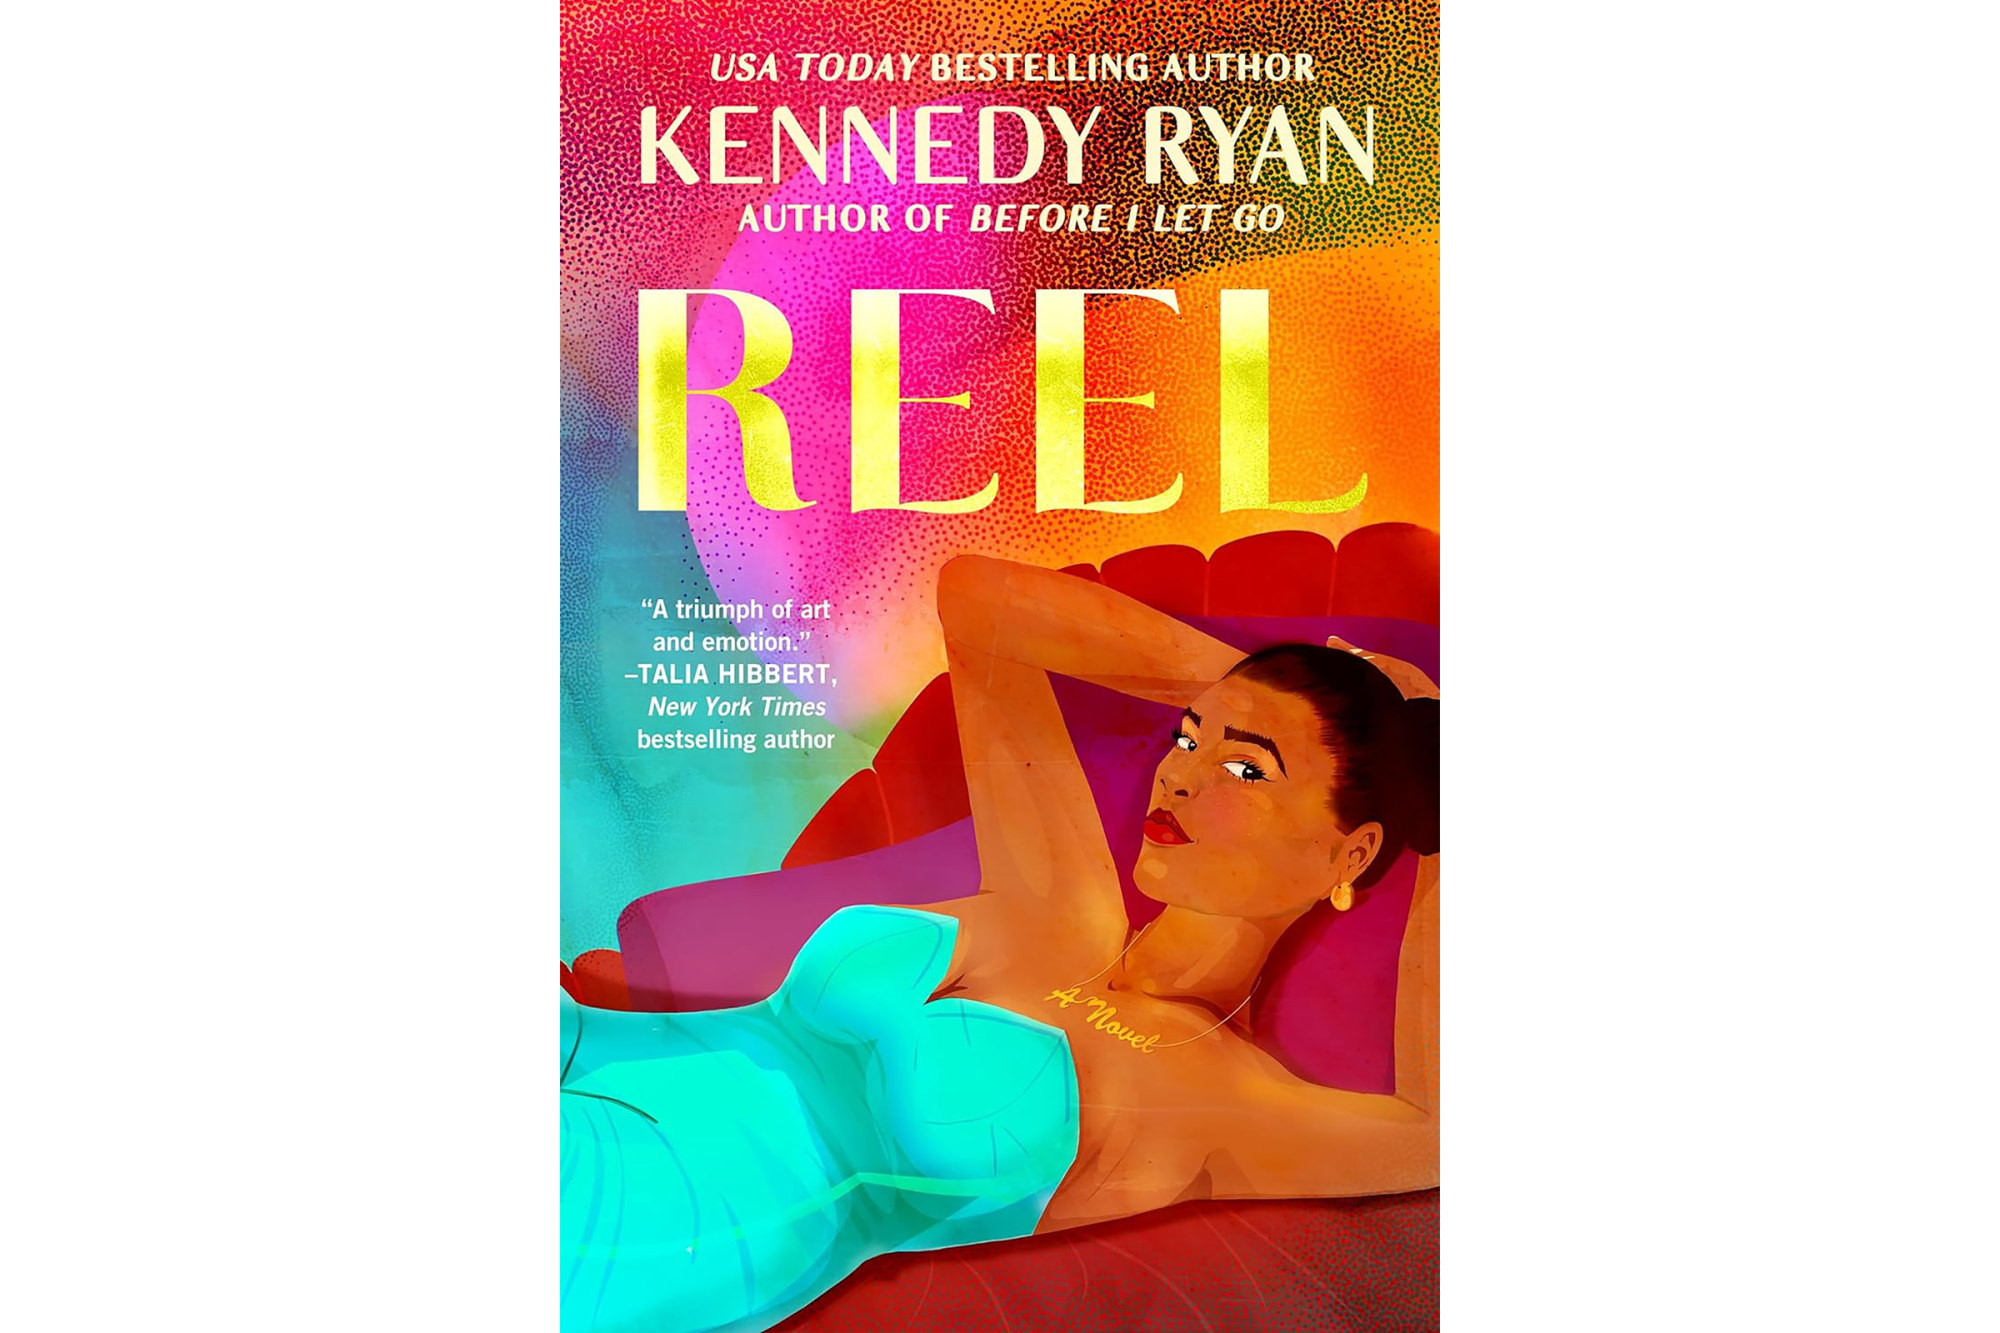 "Reel" by Kennedy Ryan